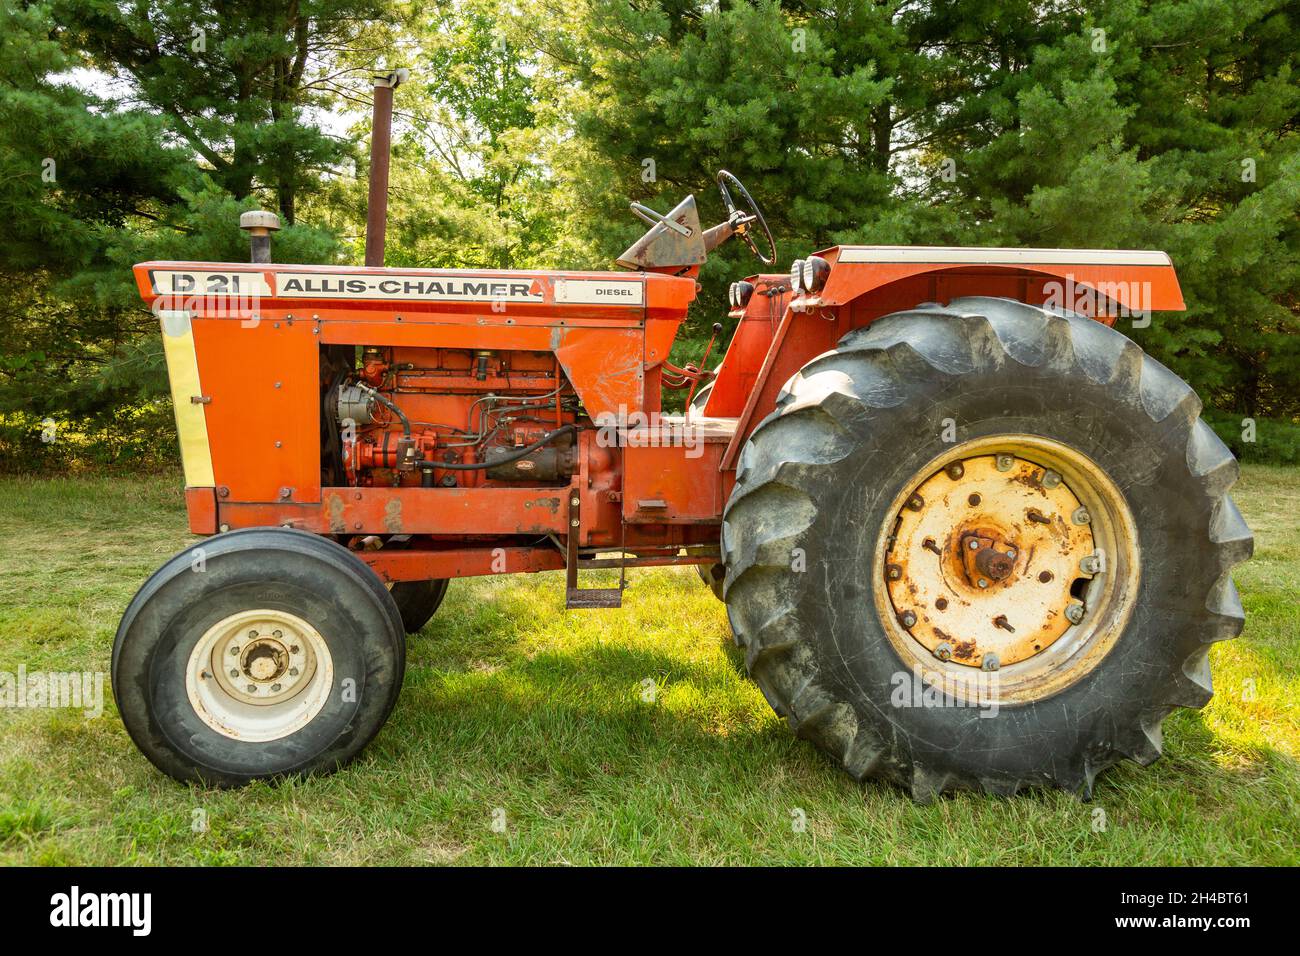 An orange antique Allis-Chalmers D21 row crop farm tractor in Warren, Indiana, USA. Stock Photo